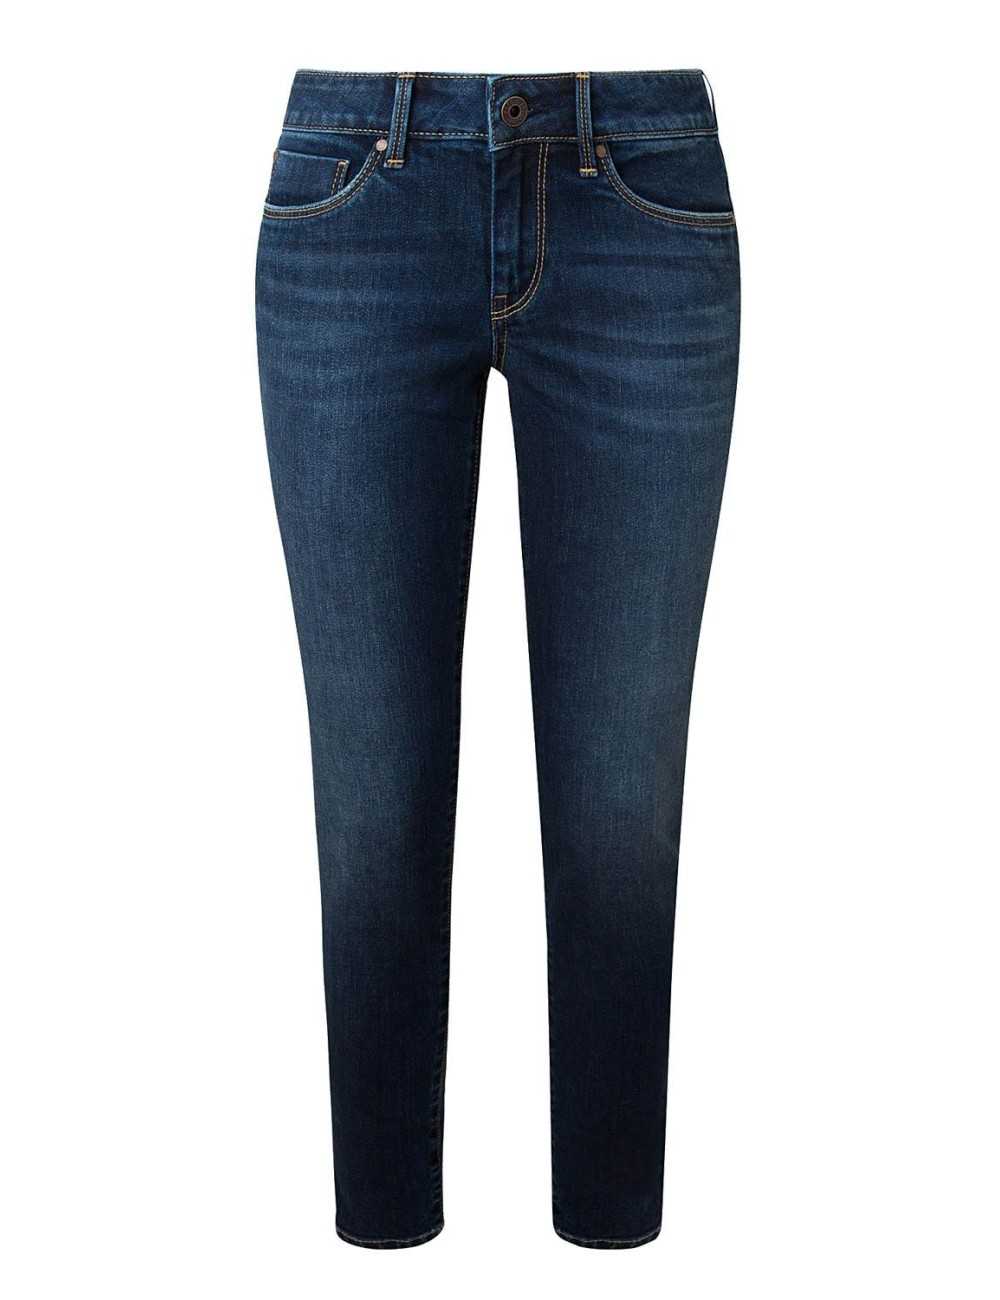 Pepe Jeans Soho jeans donna denim blu scuro - Jeans & Pantaloni Donna